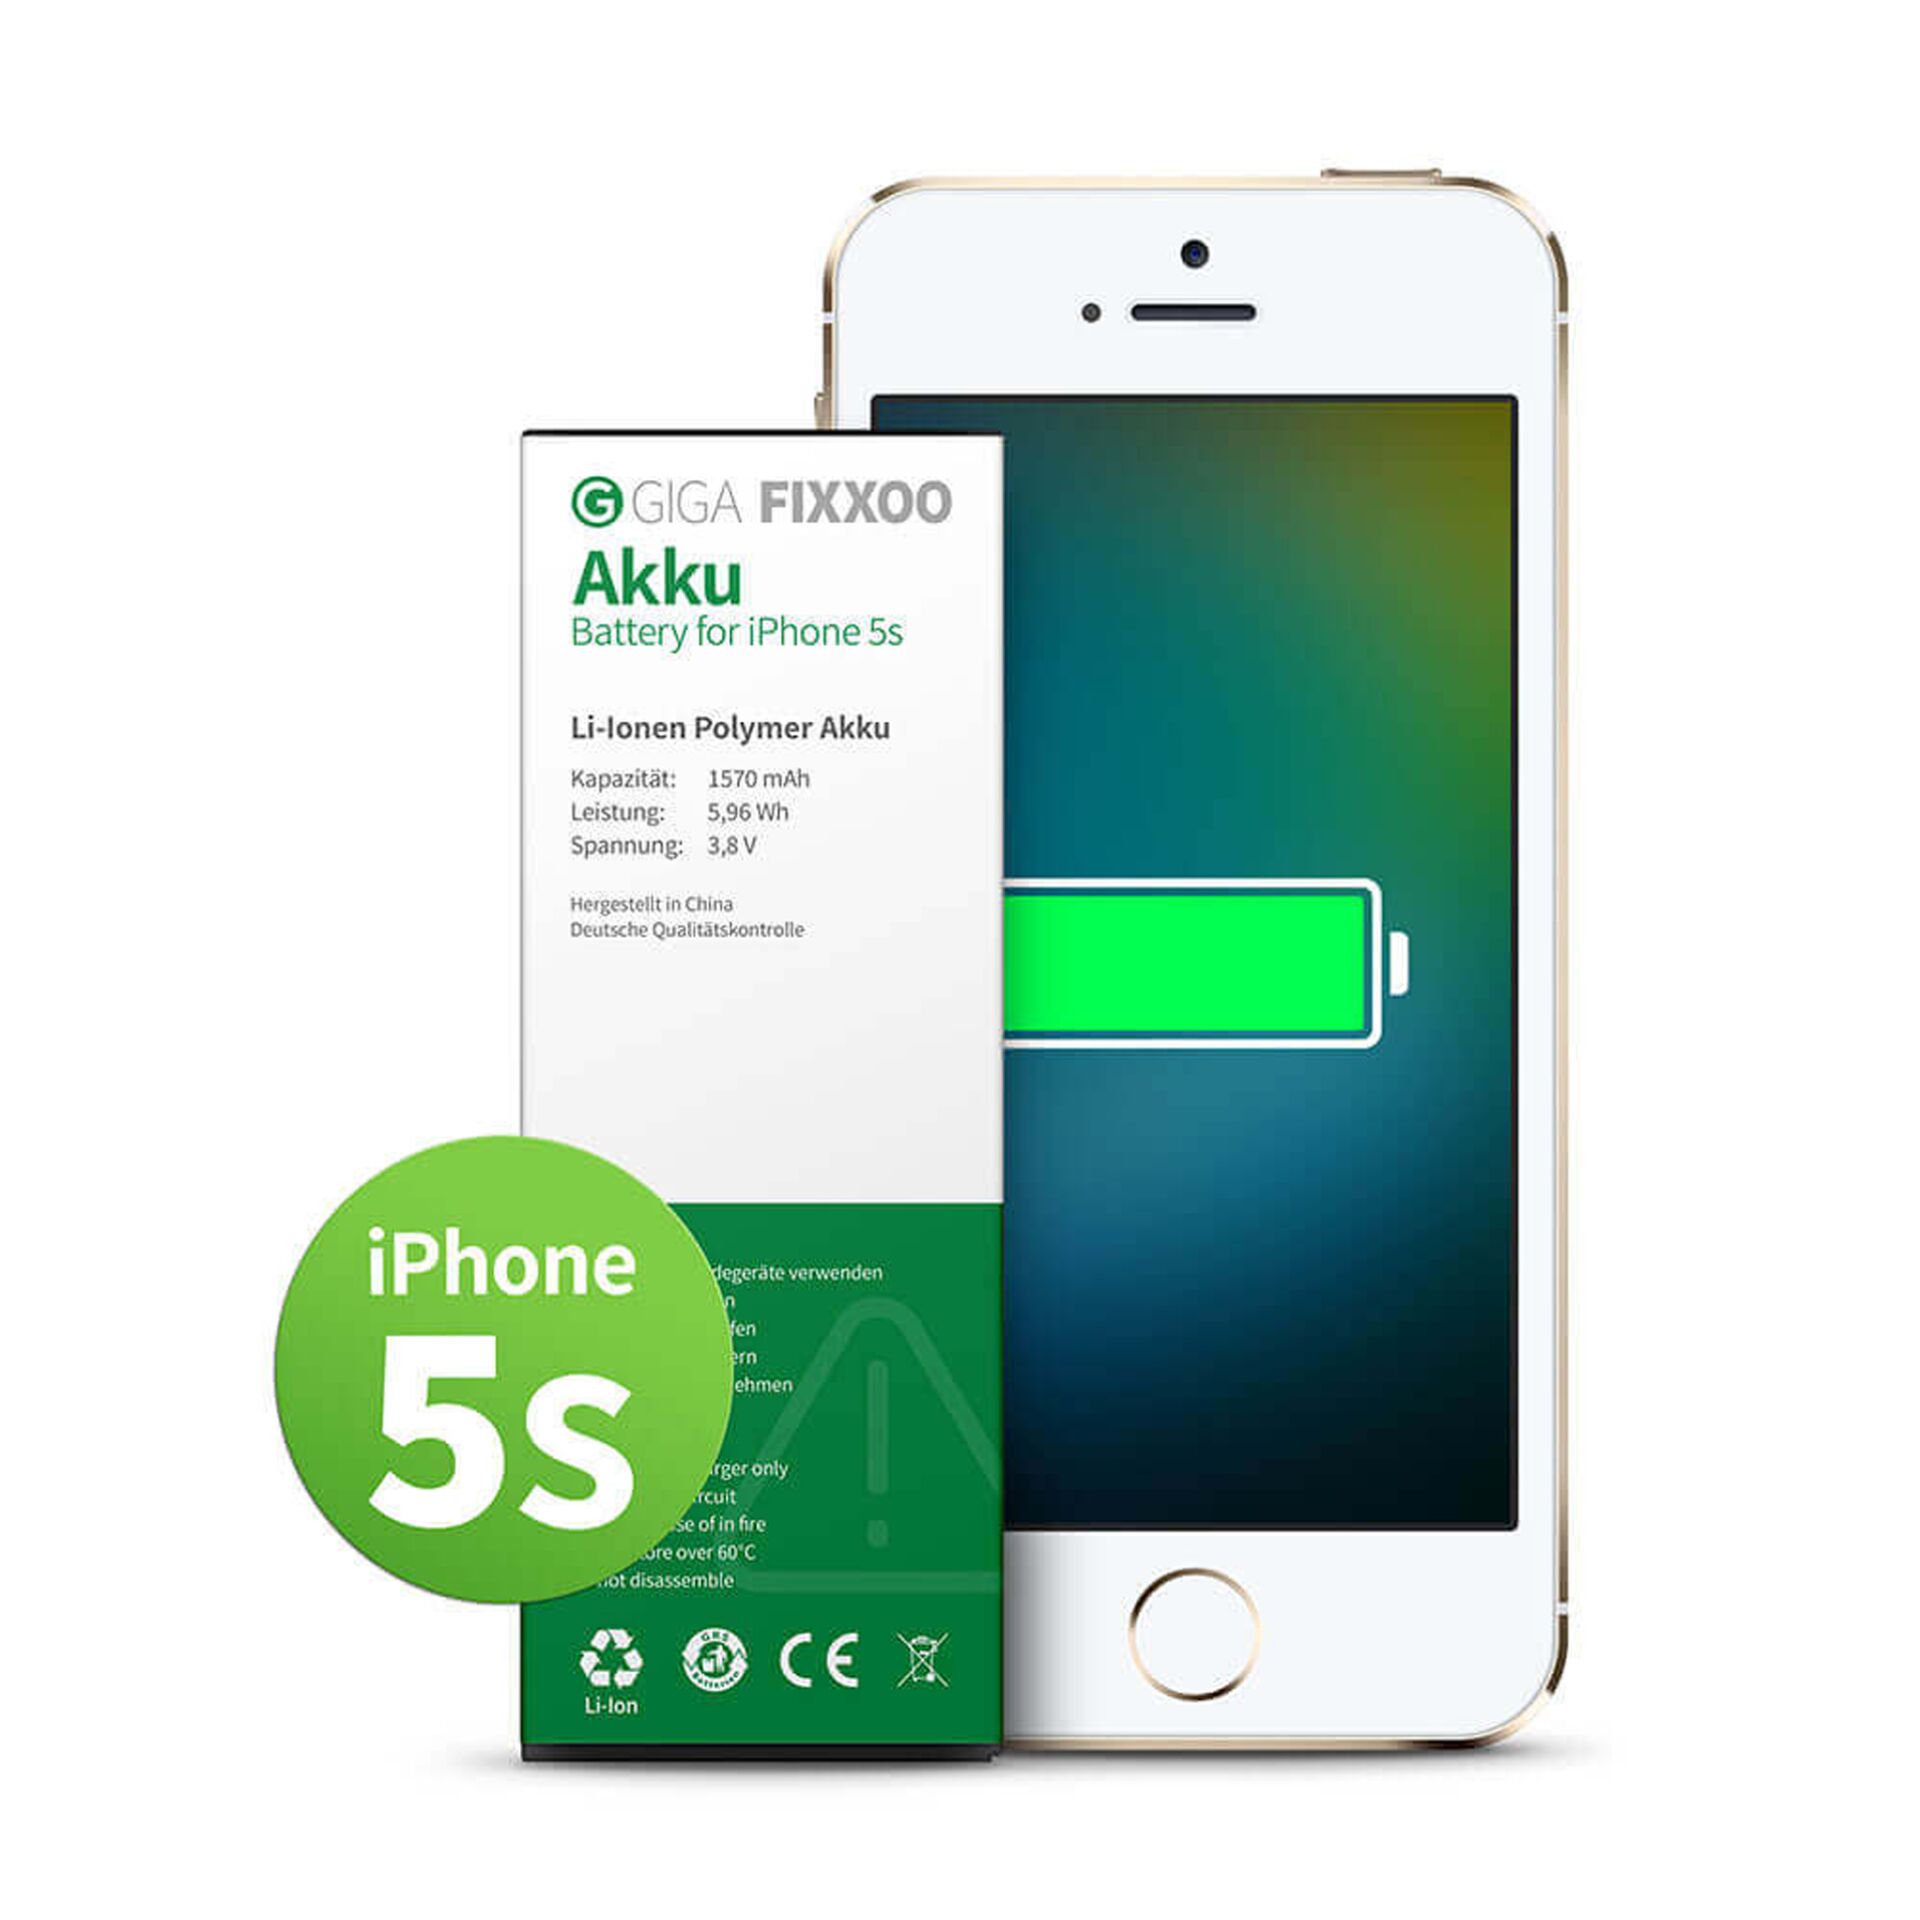 GIGA Fixxoo Akku - iPhone 5s incl. Einbau durch CSV! 